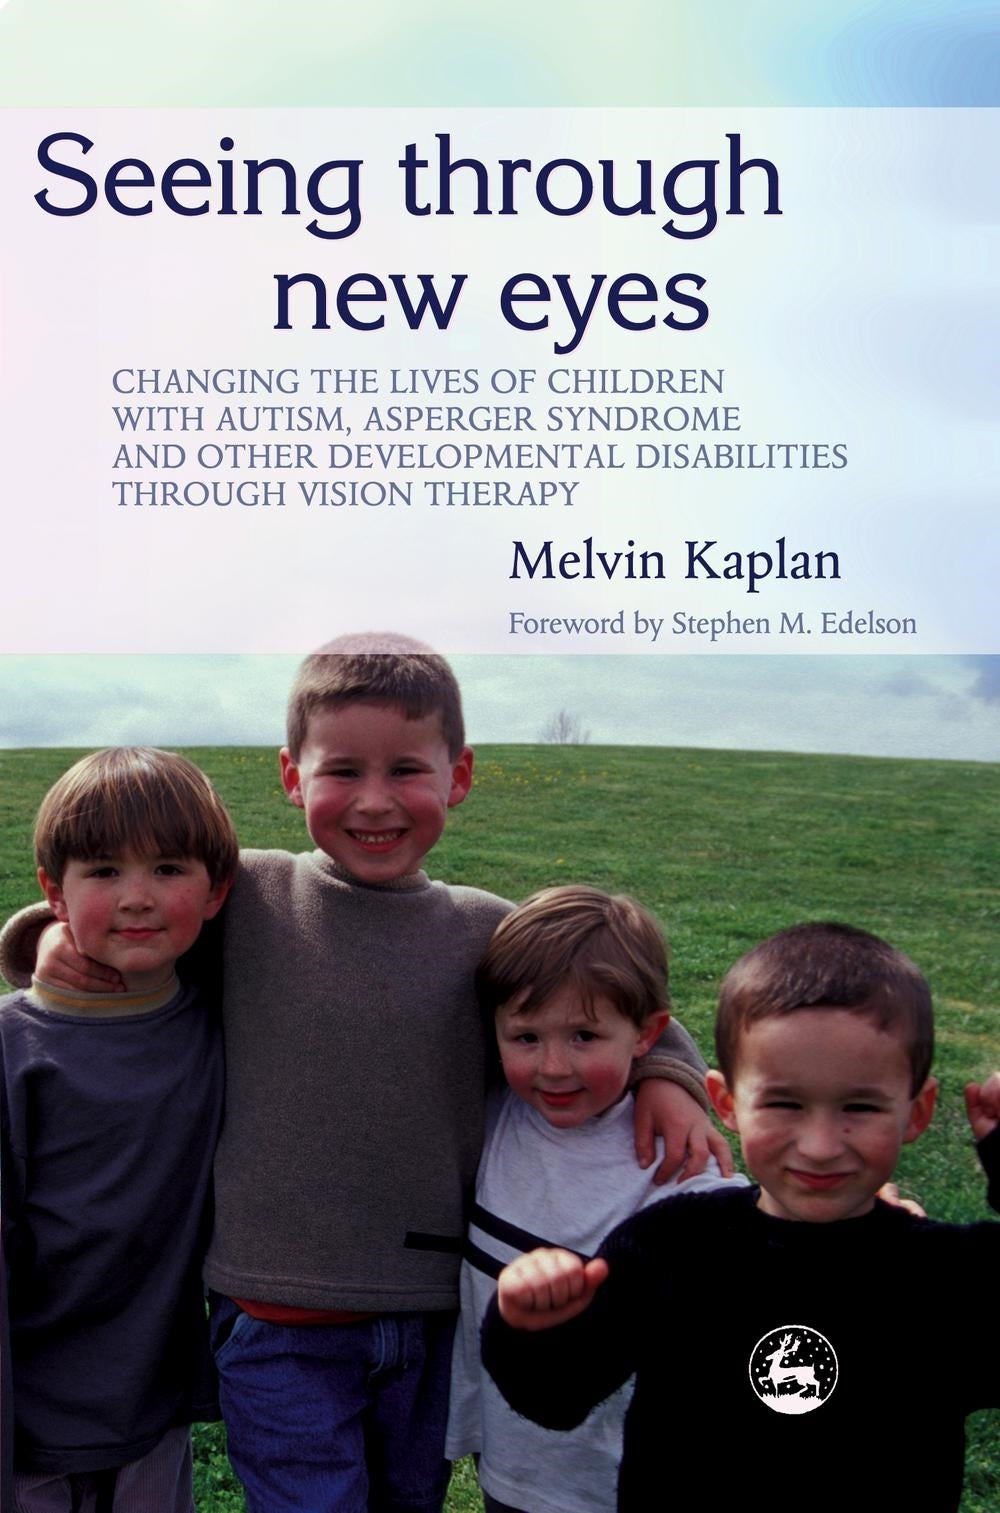 Seeing Through New Eyes by Stephen M. Edelson, Melvin Kaplan